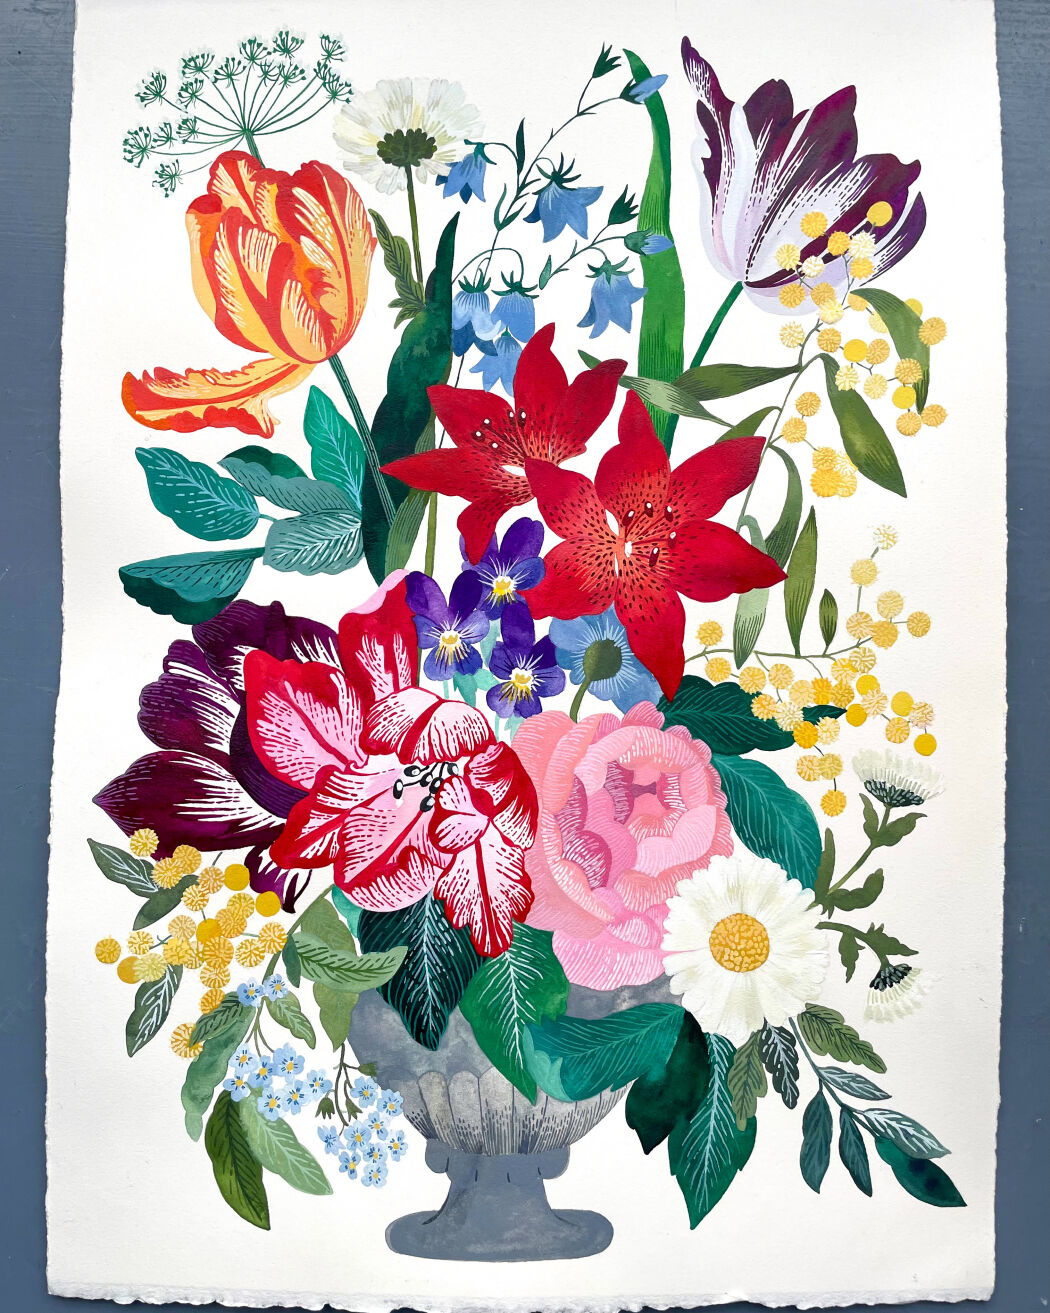 Botanical artwork handpainted by the artist Malin gyllensvaan